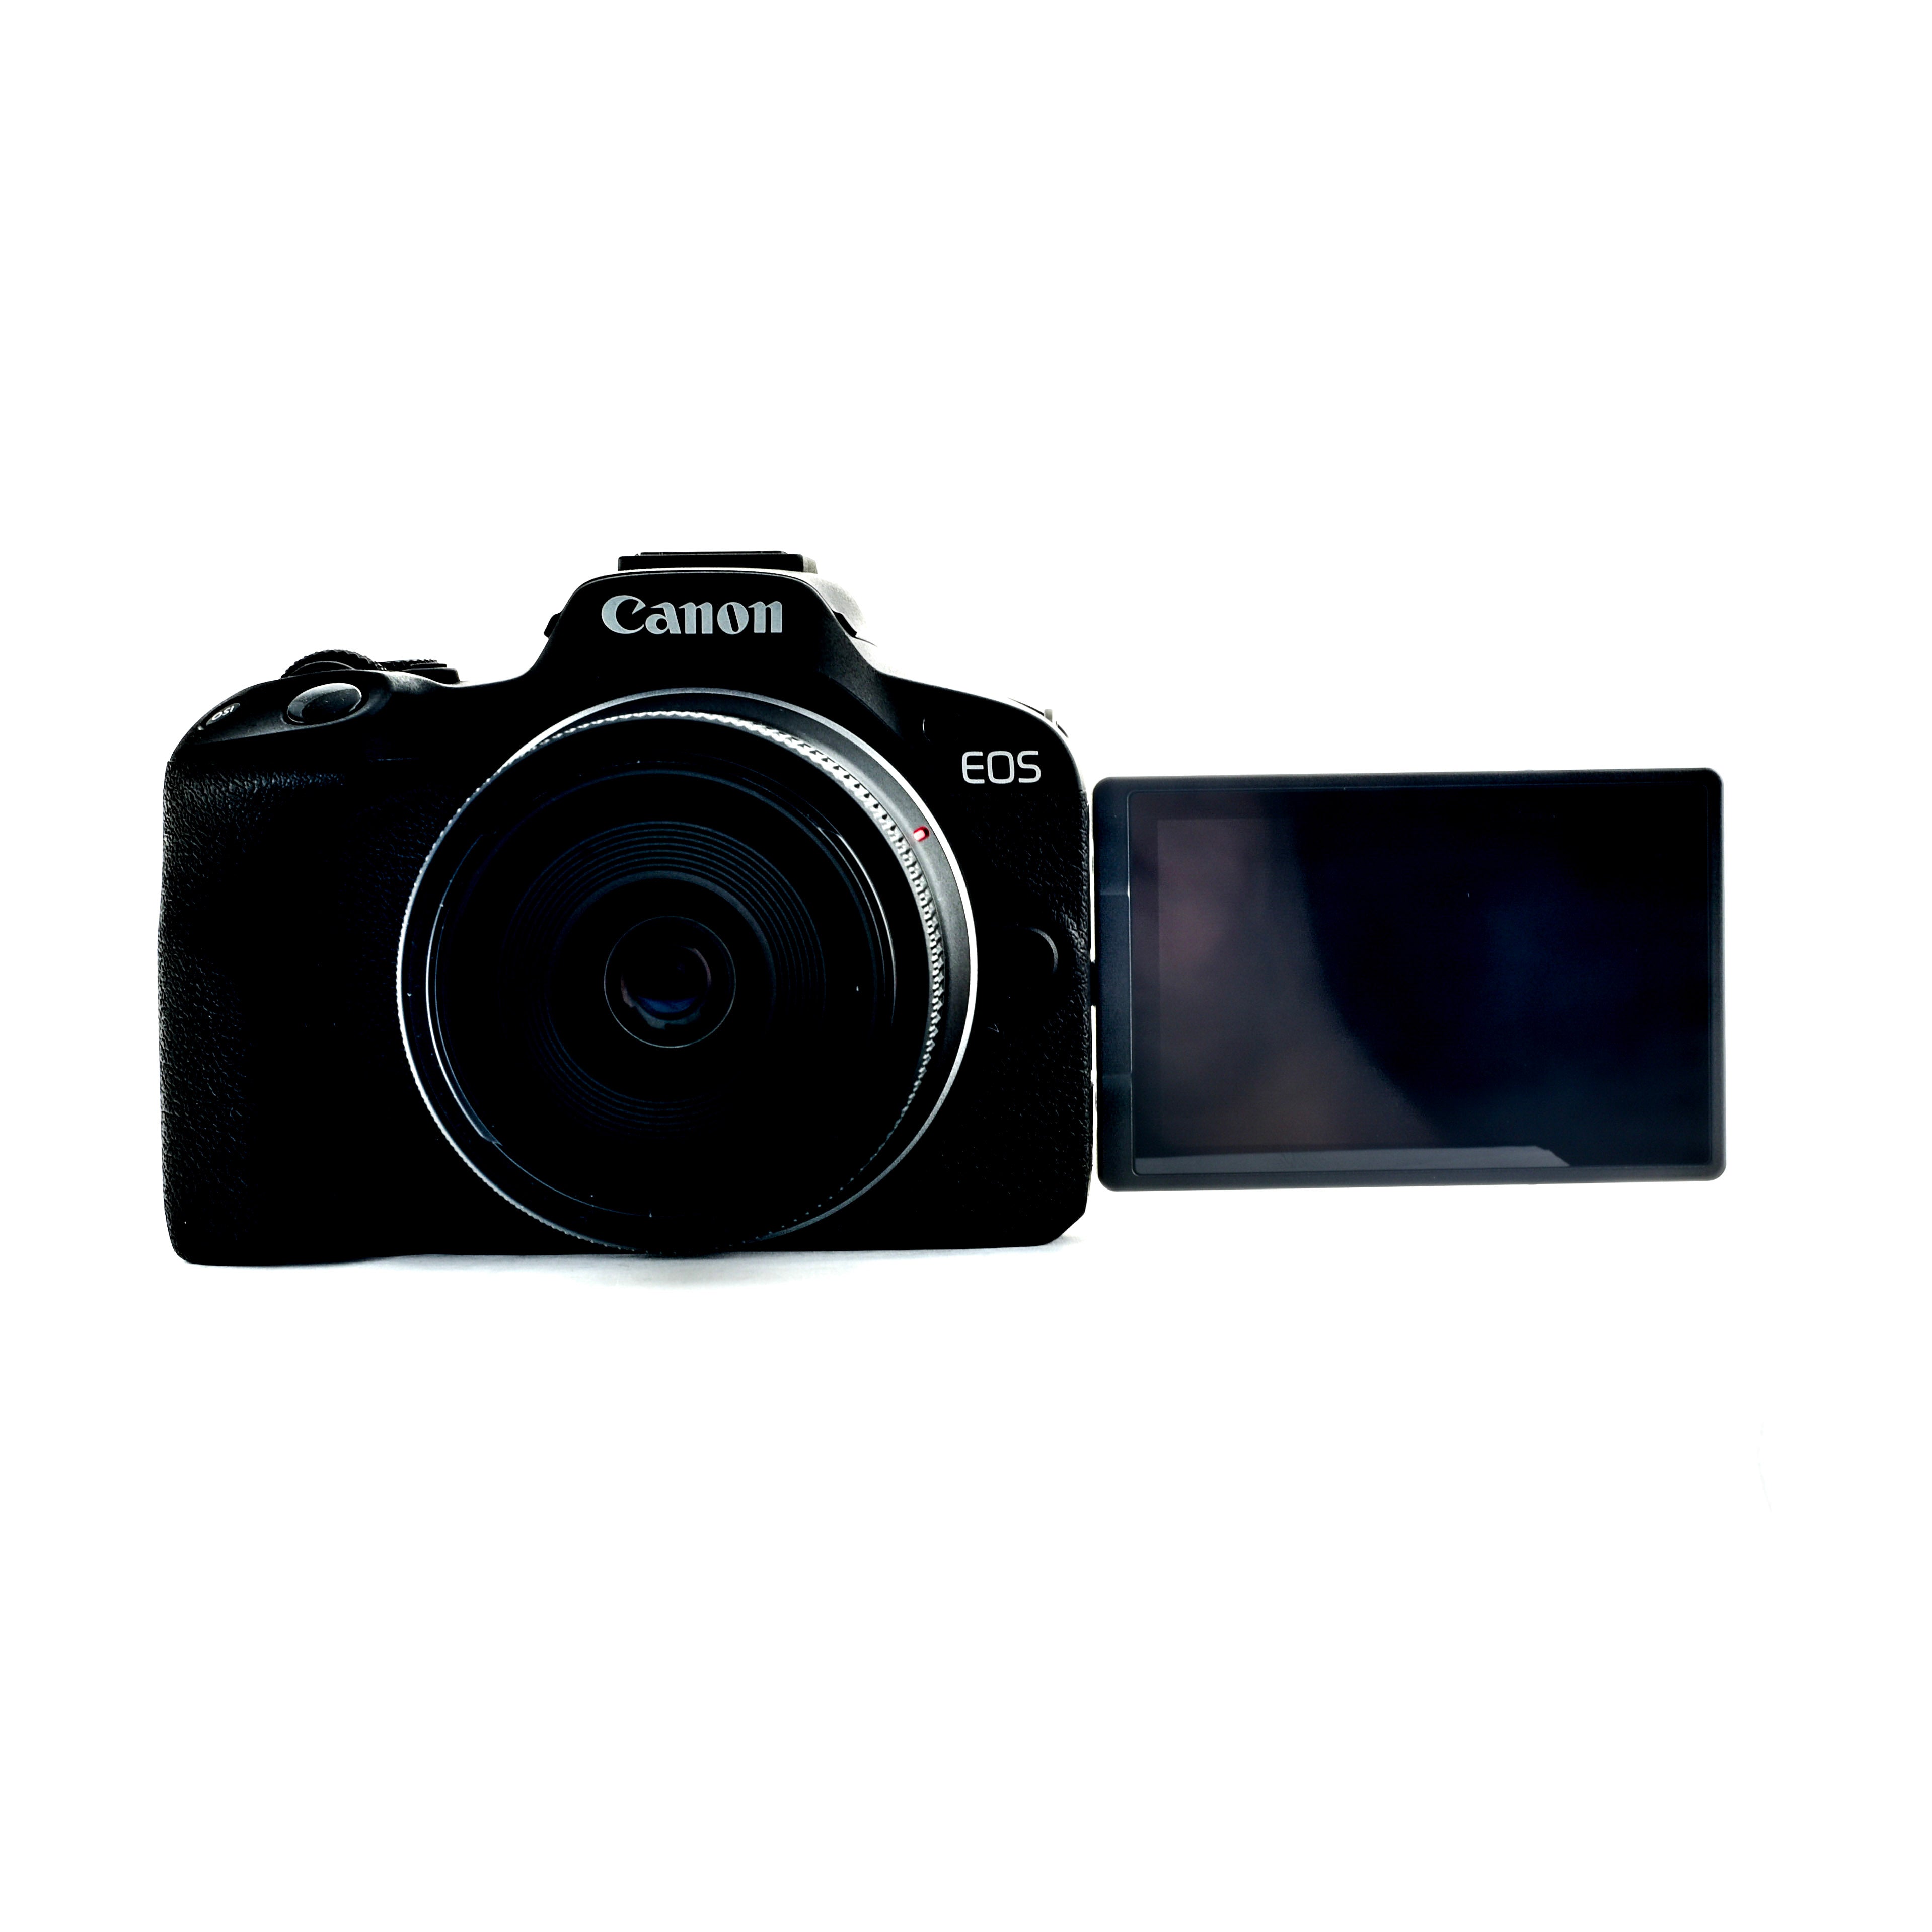 Canon Eos R50 Mirrorless Dslr Camera & Twin Lens Kit